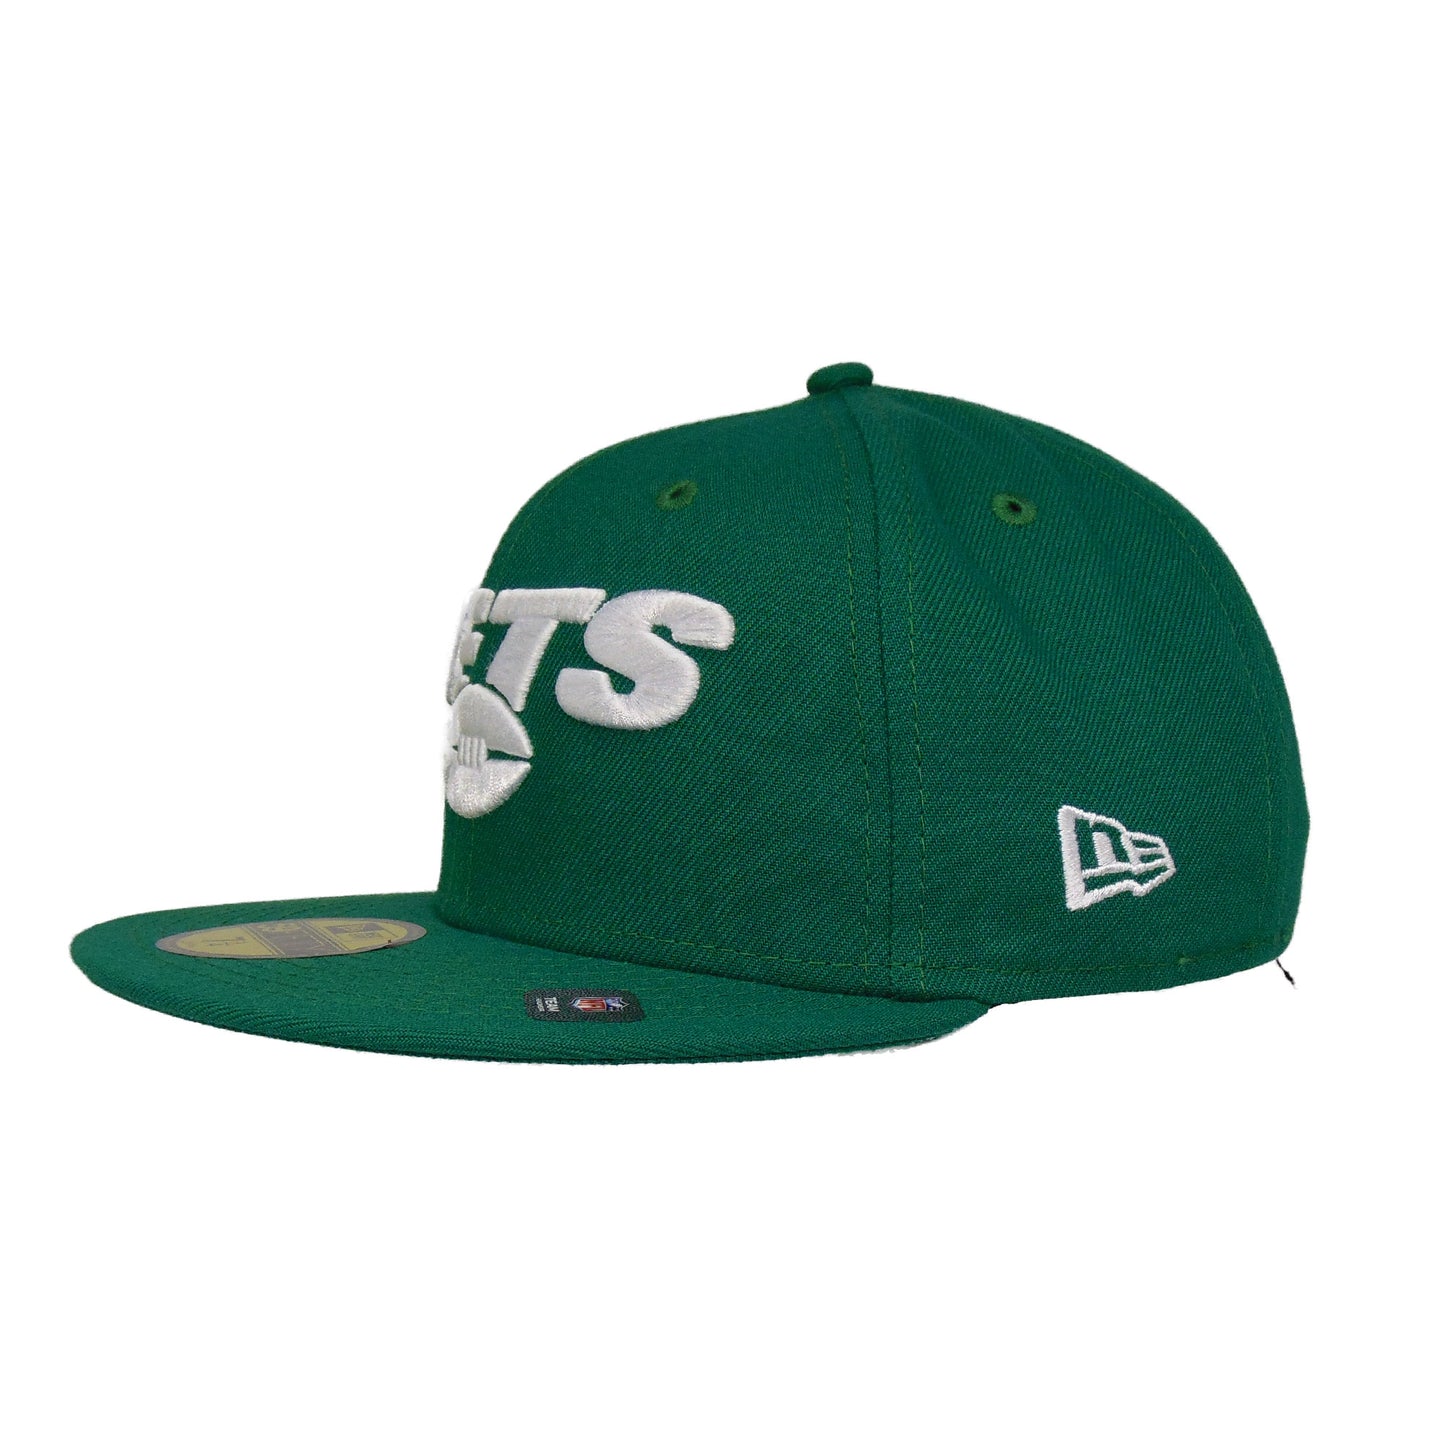 New York Jets Custom New Era 59FIFTY Cap vntg green